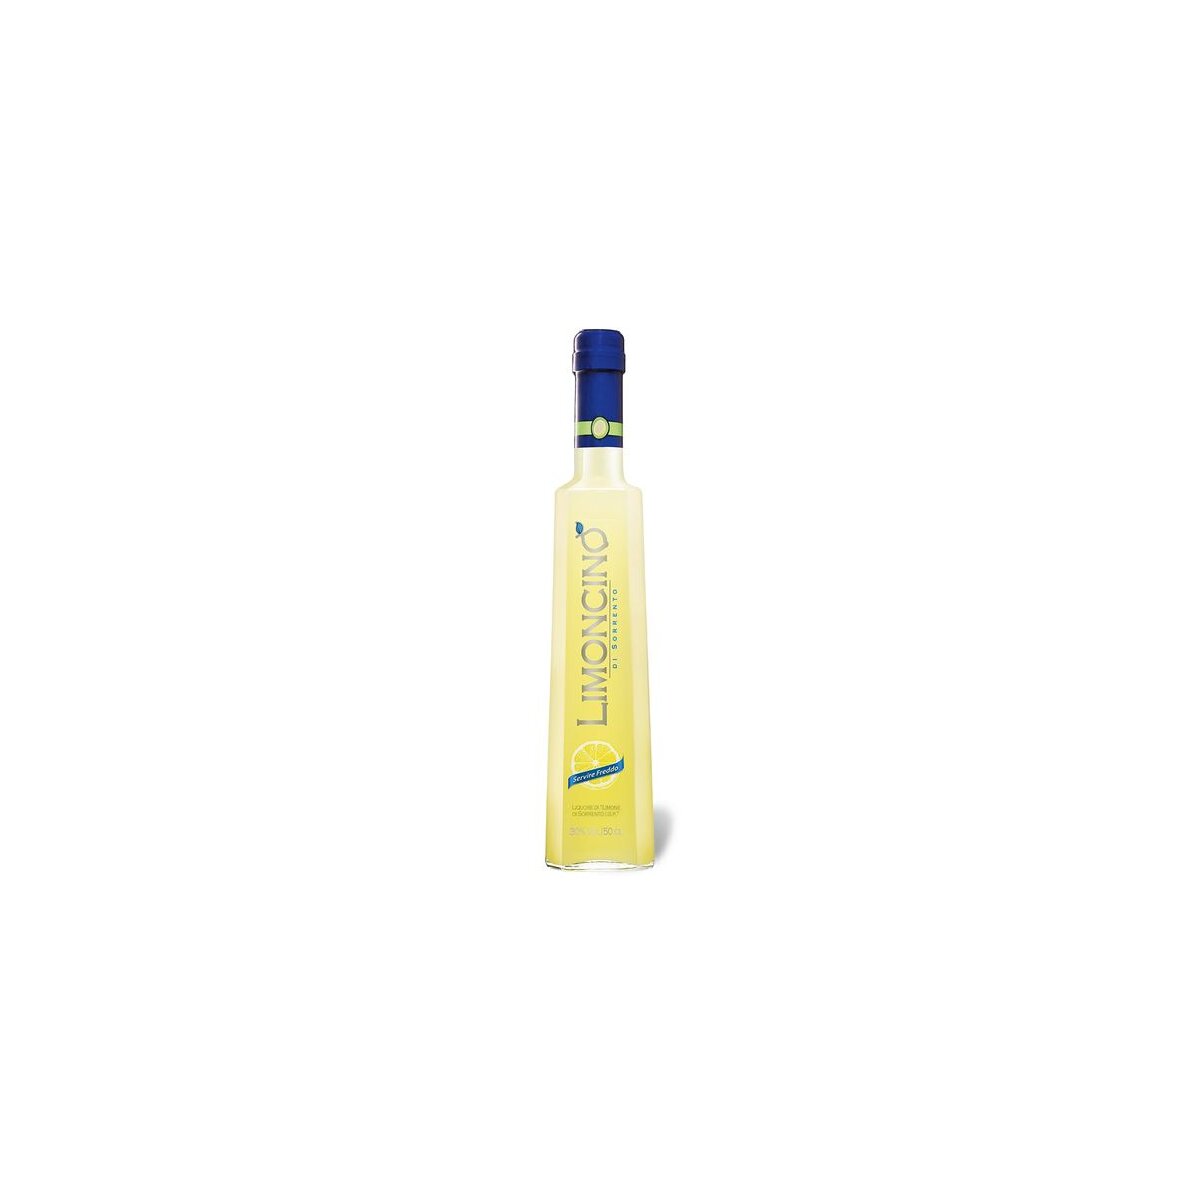 Limoncino Originale di Sorrento 30% Vol B-Ware neuwertig, 6,99 €